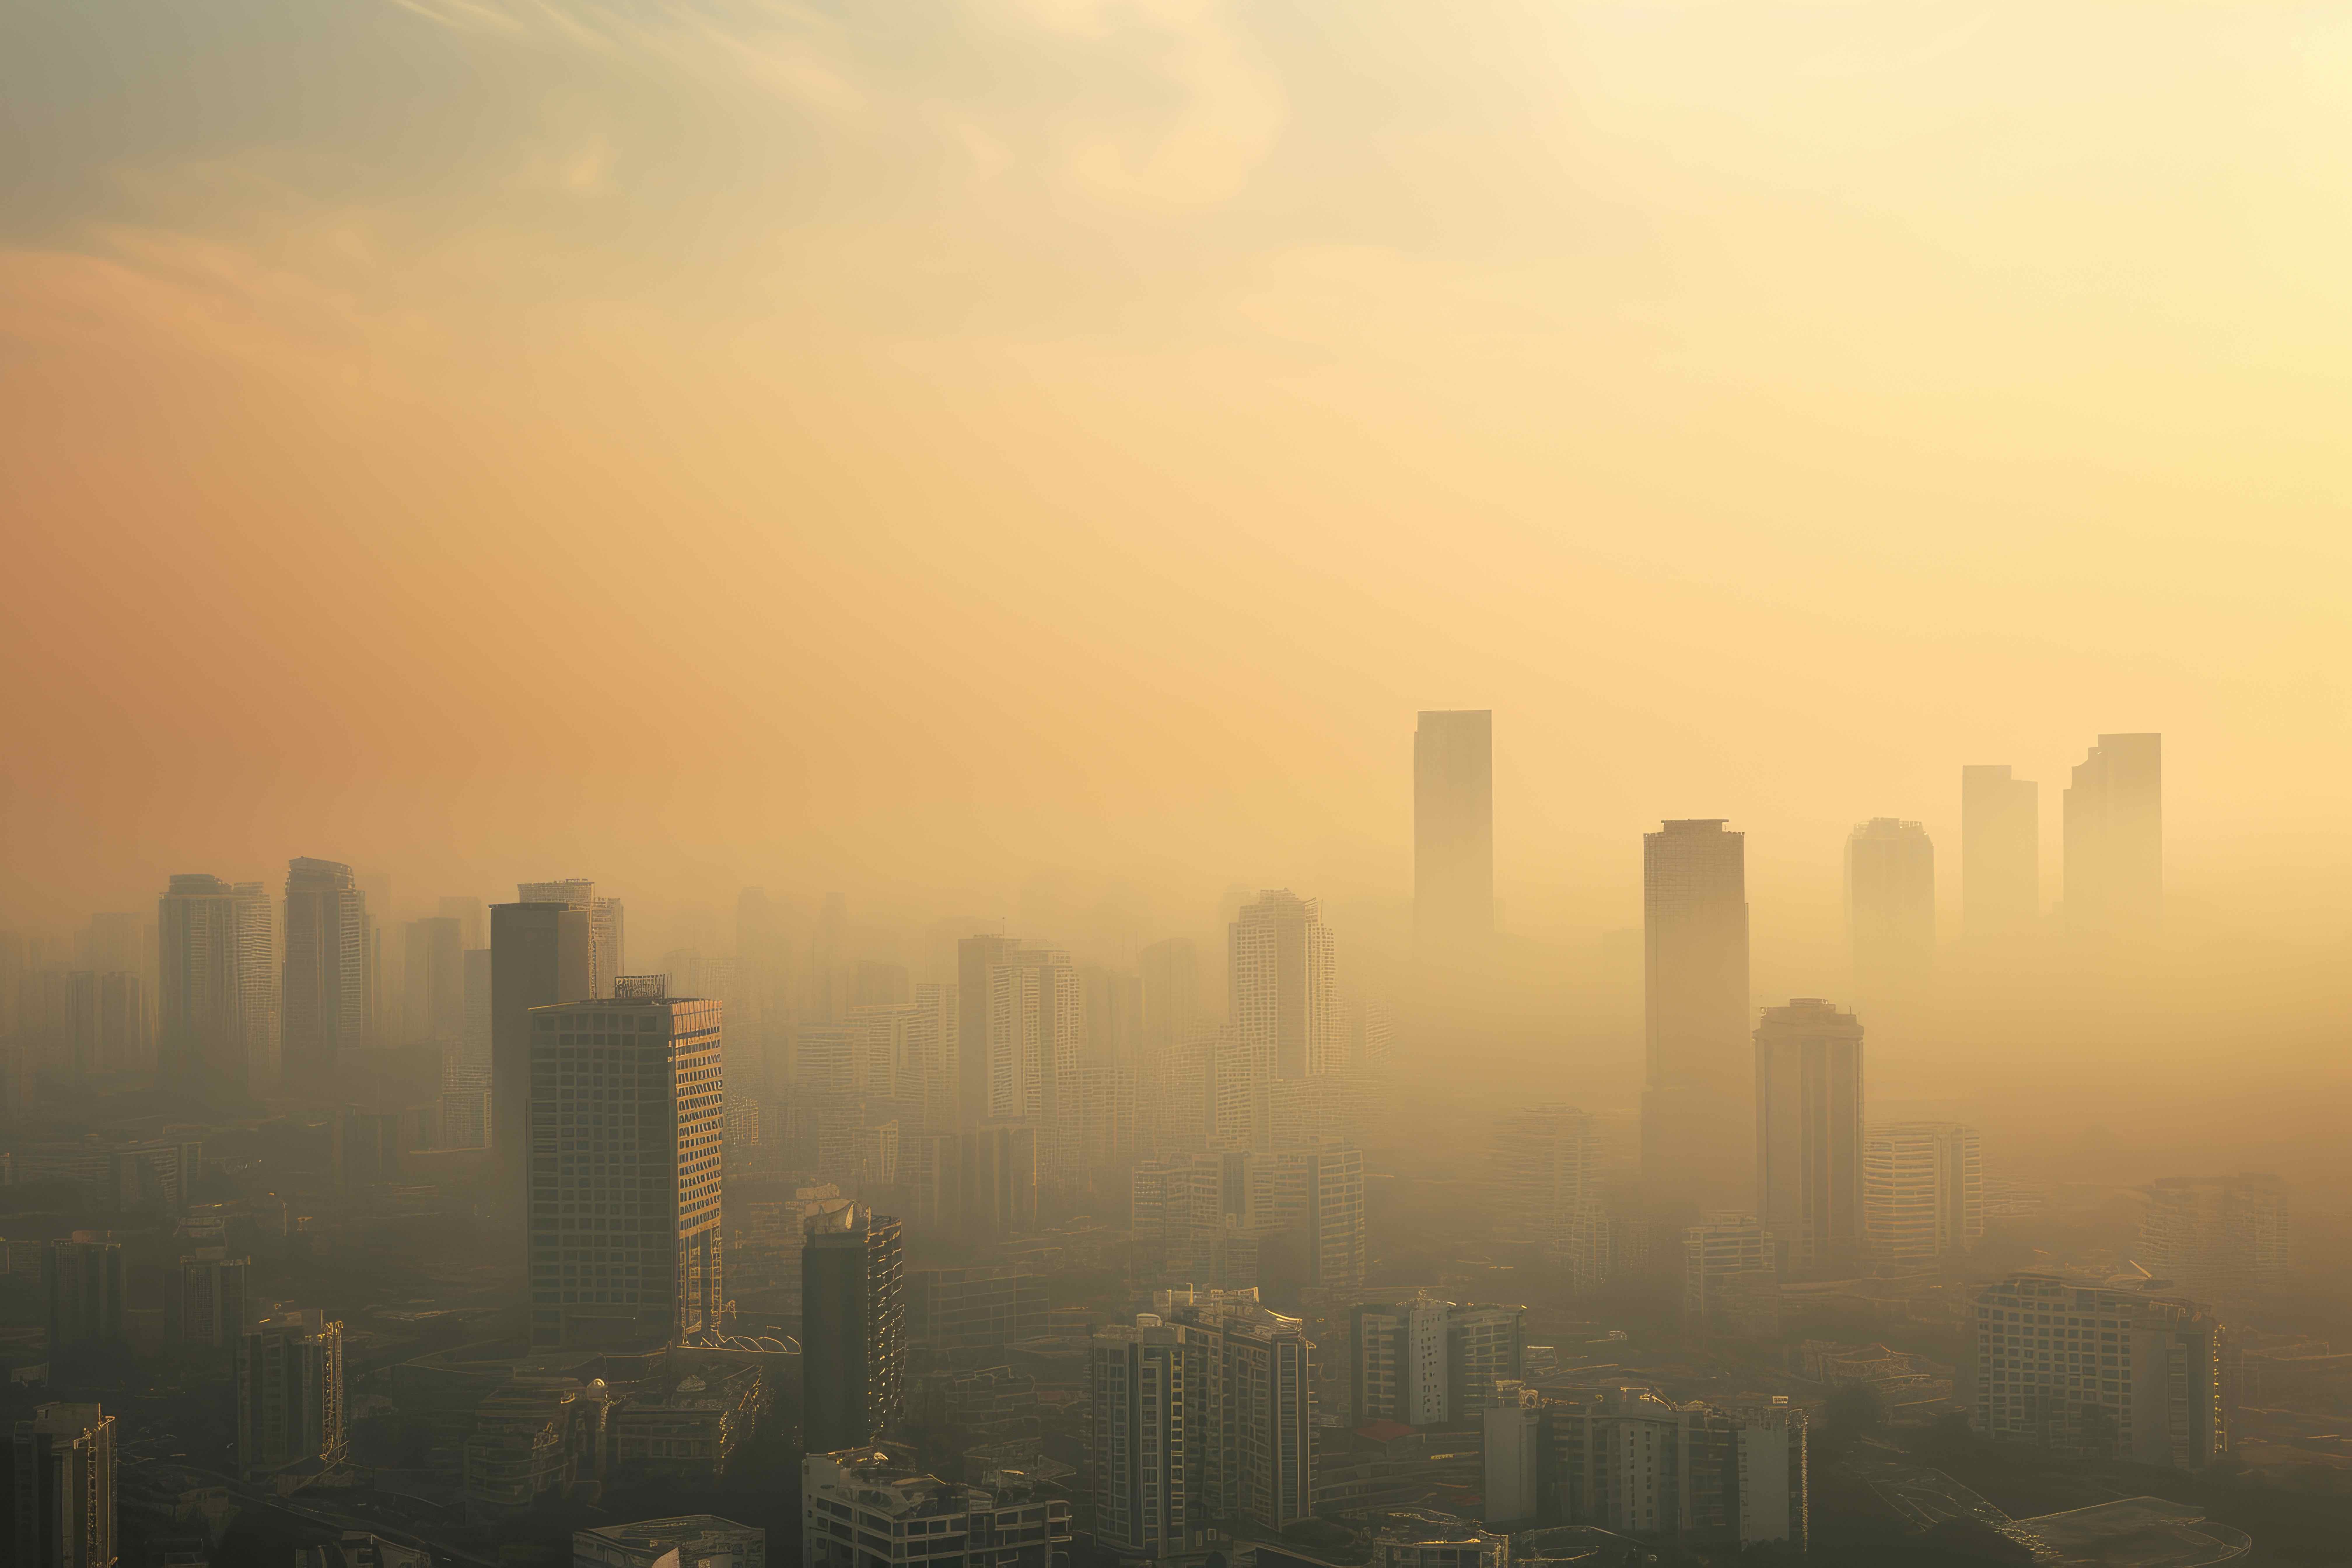 La pollution de l'air que nous respirons diminue notre espérance de vie. © Milanka, Adobe Stock